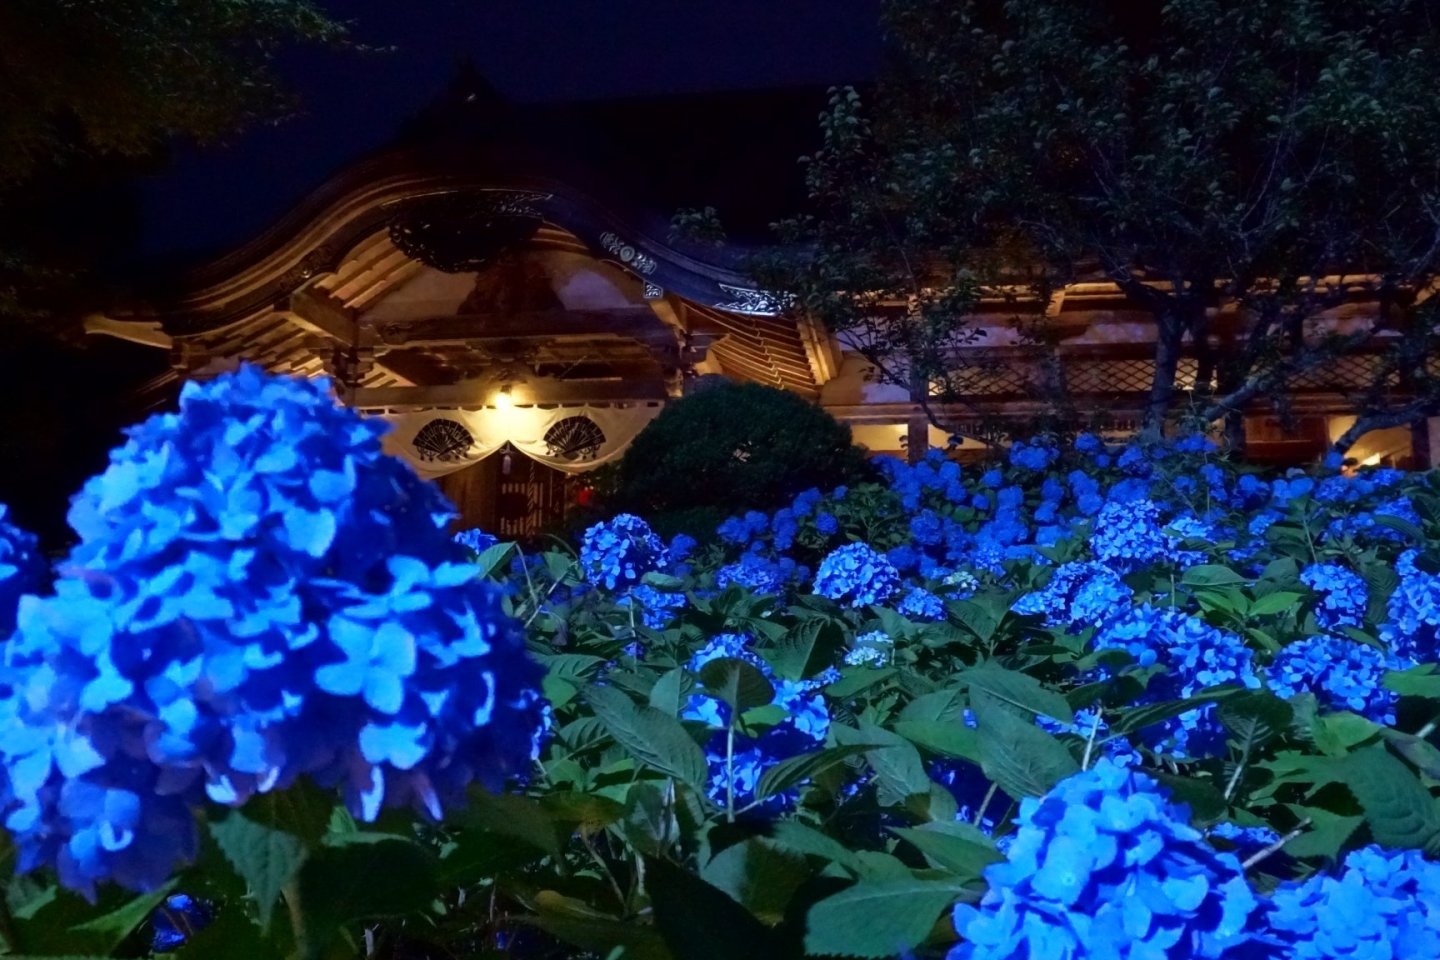 Stunning blue hydrangeas at night at Unshoji Temple